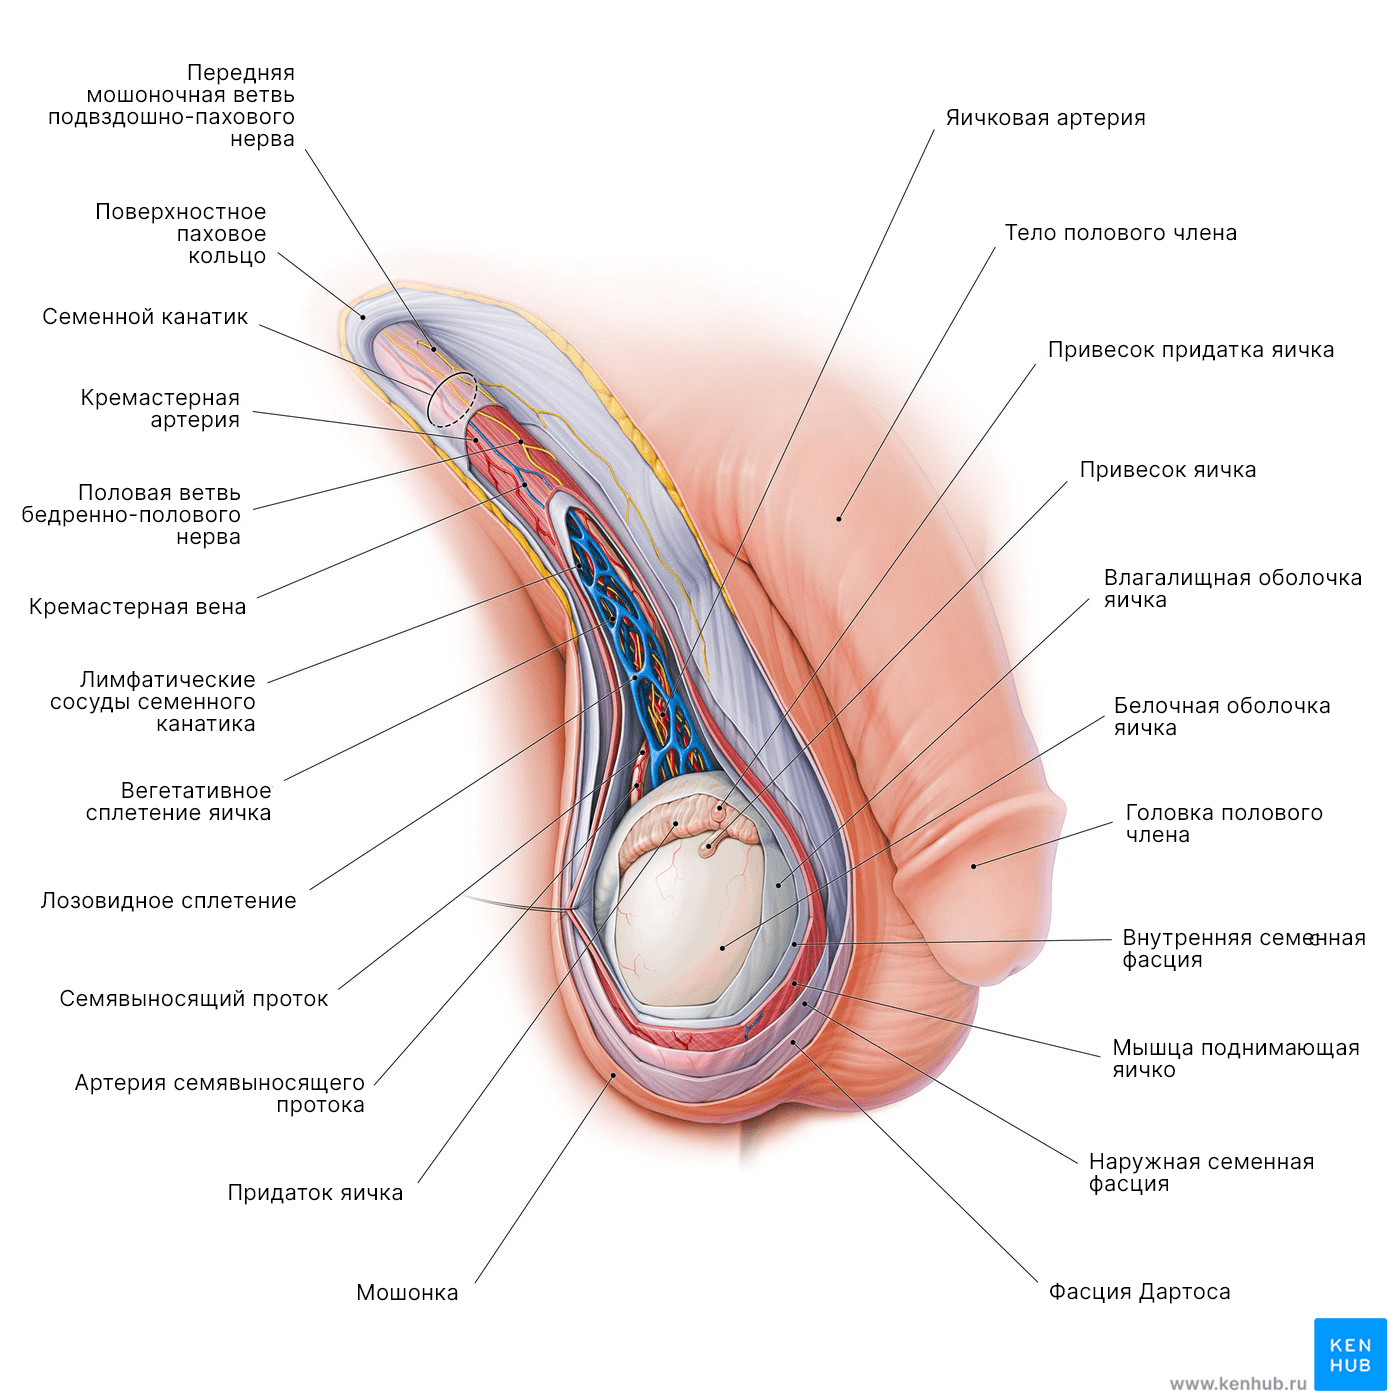 Анатомия мошонки и семенного канатика: Диаграмма